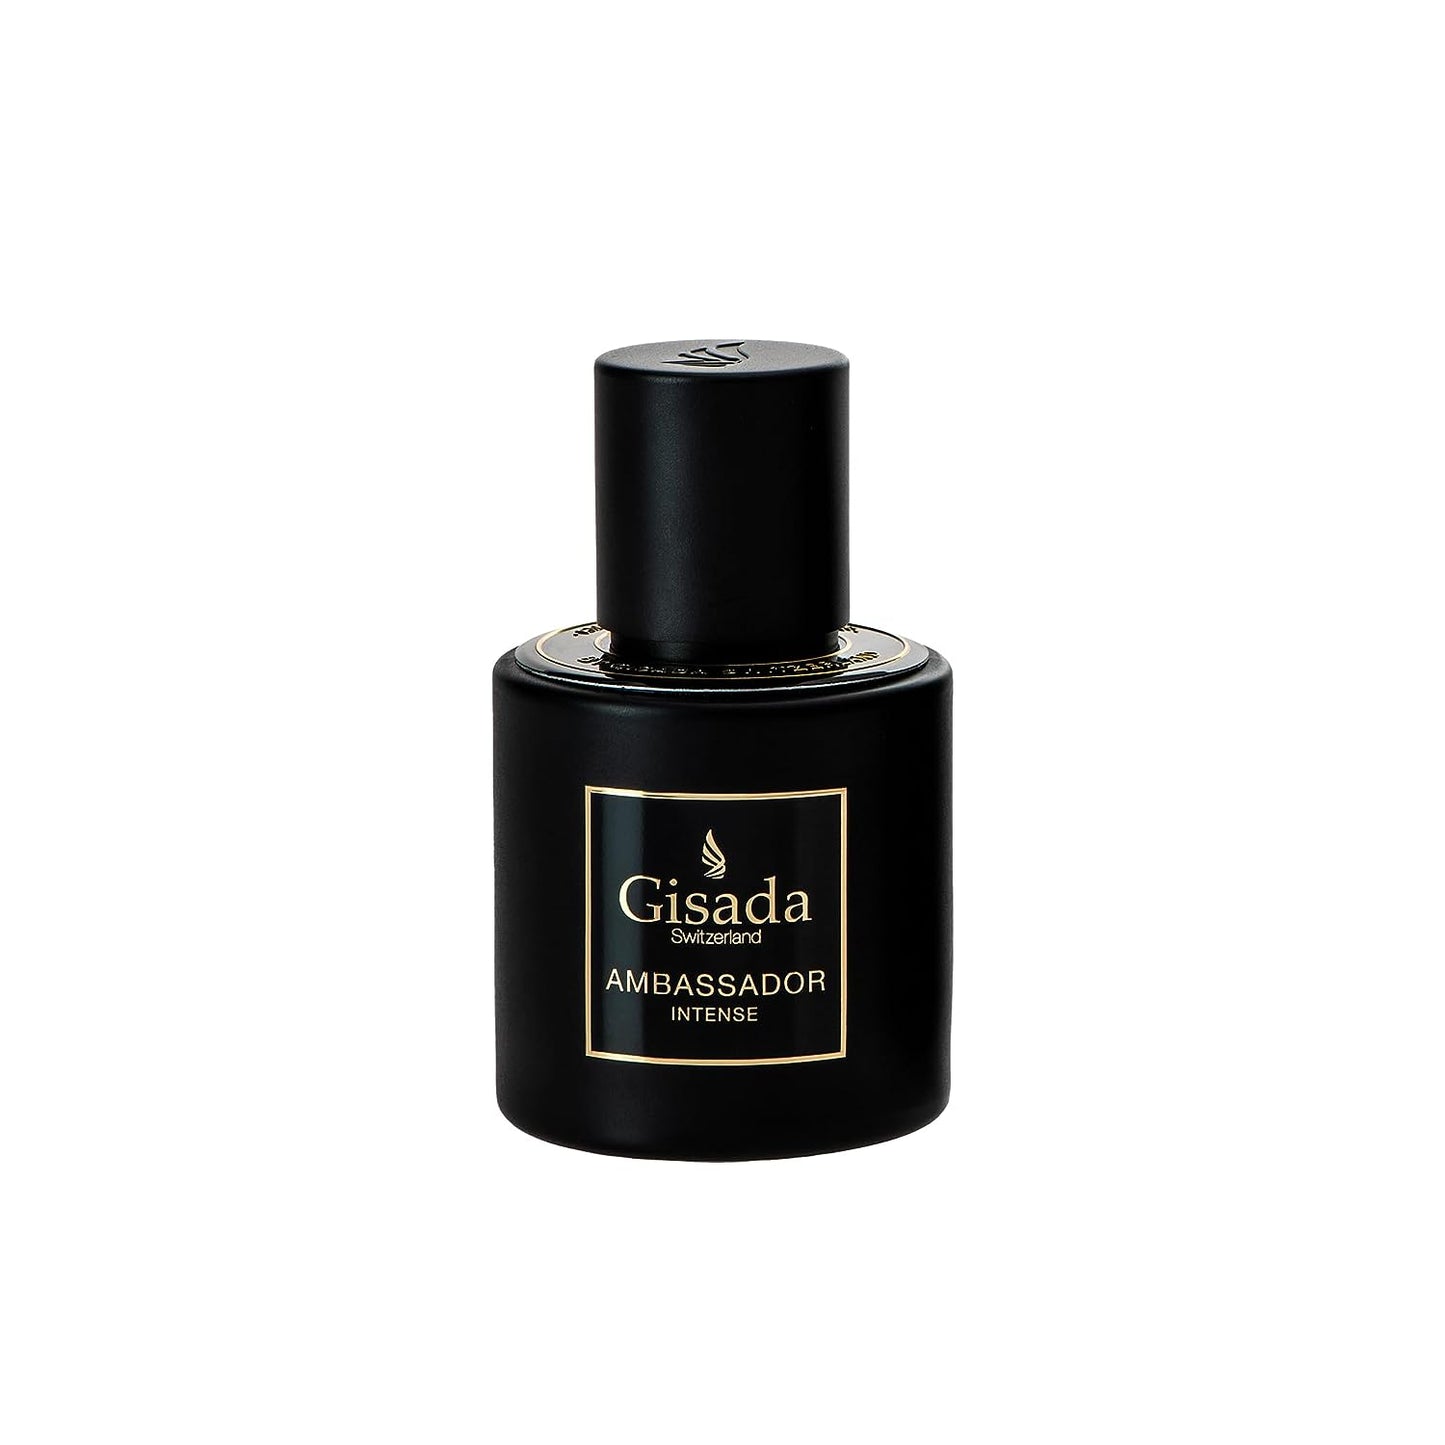 Gisada - Ambassador Intense - Eau de Perfume - 50ML - 1.7 Fl Oz - Spicy, fresh and very lively fragrance for Men - Even more intense, even more lively, even more masculine!